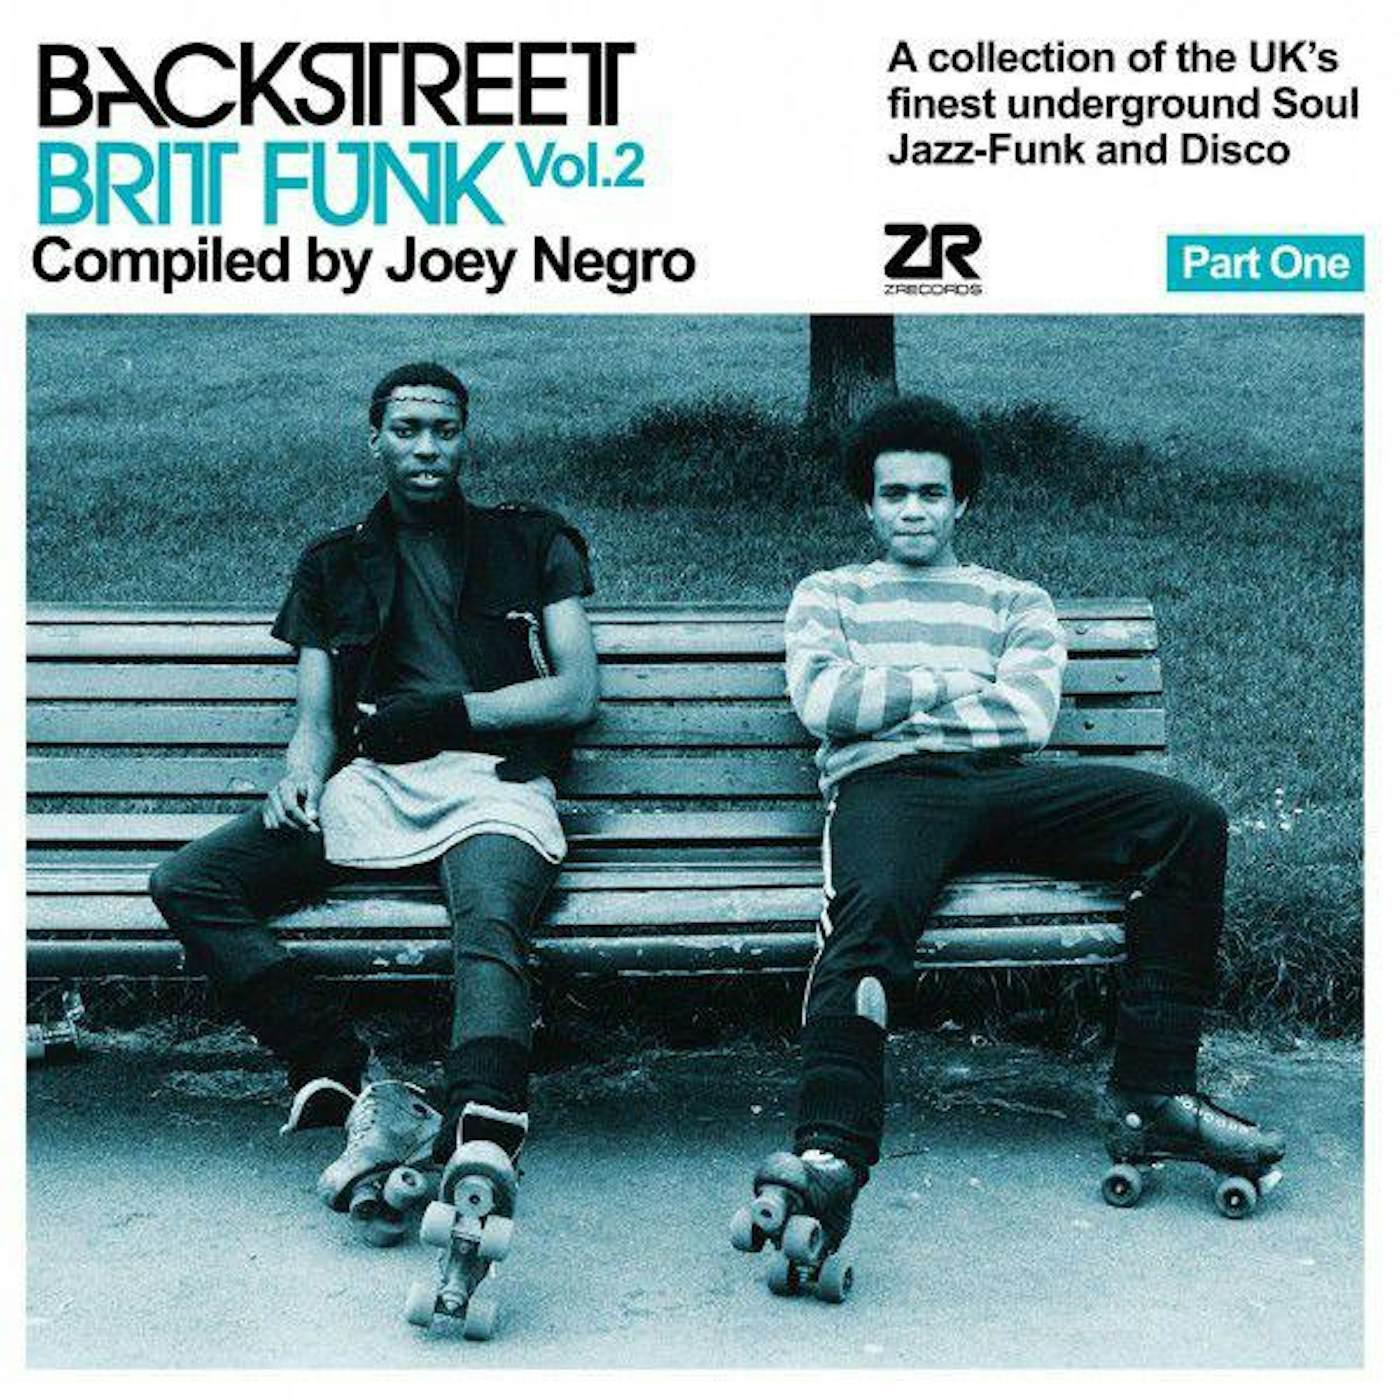 Joey Negro Backstreet Brit Funk Vol.2 (part one) vinyl record